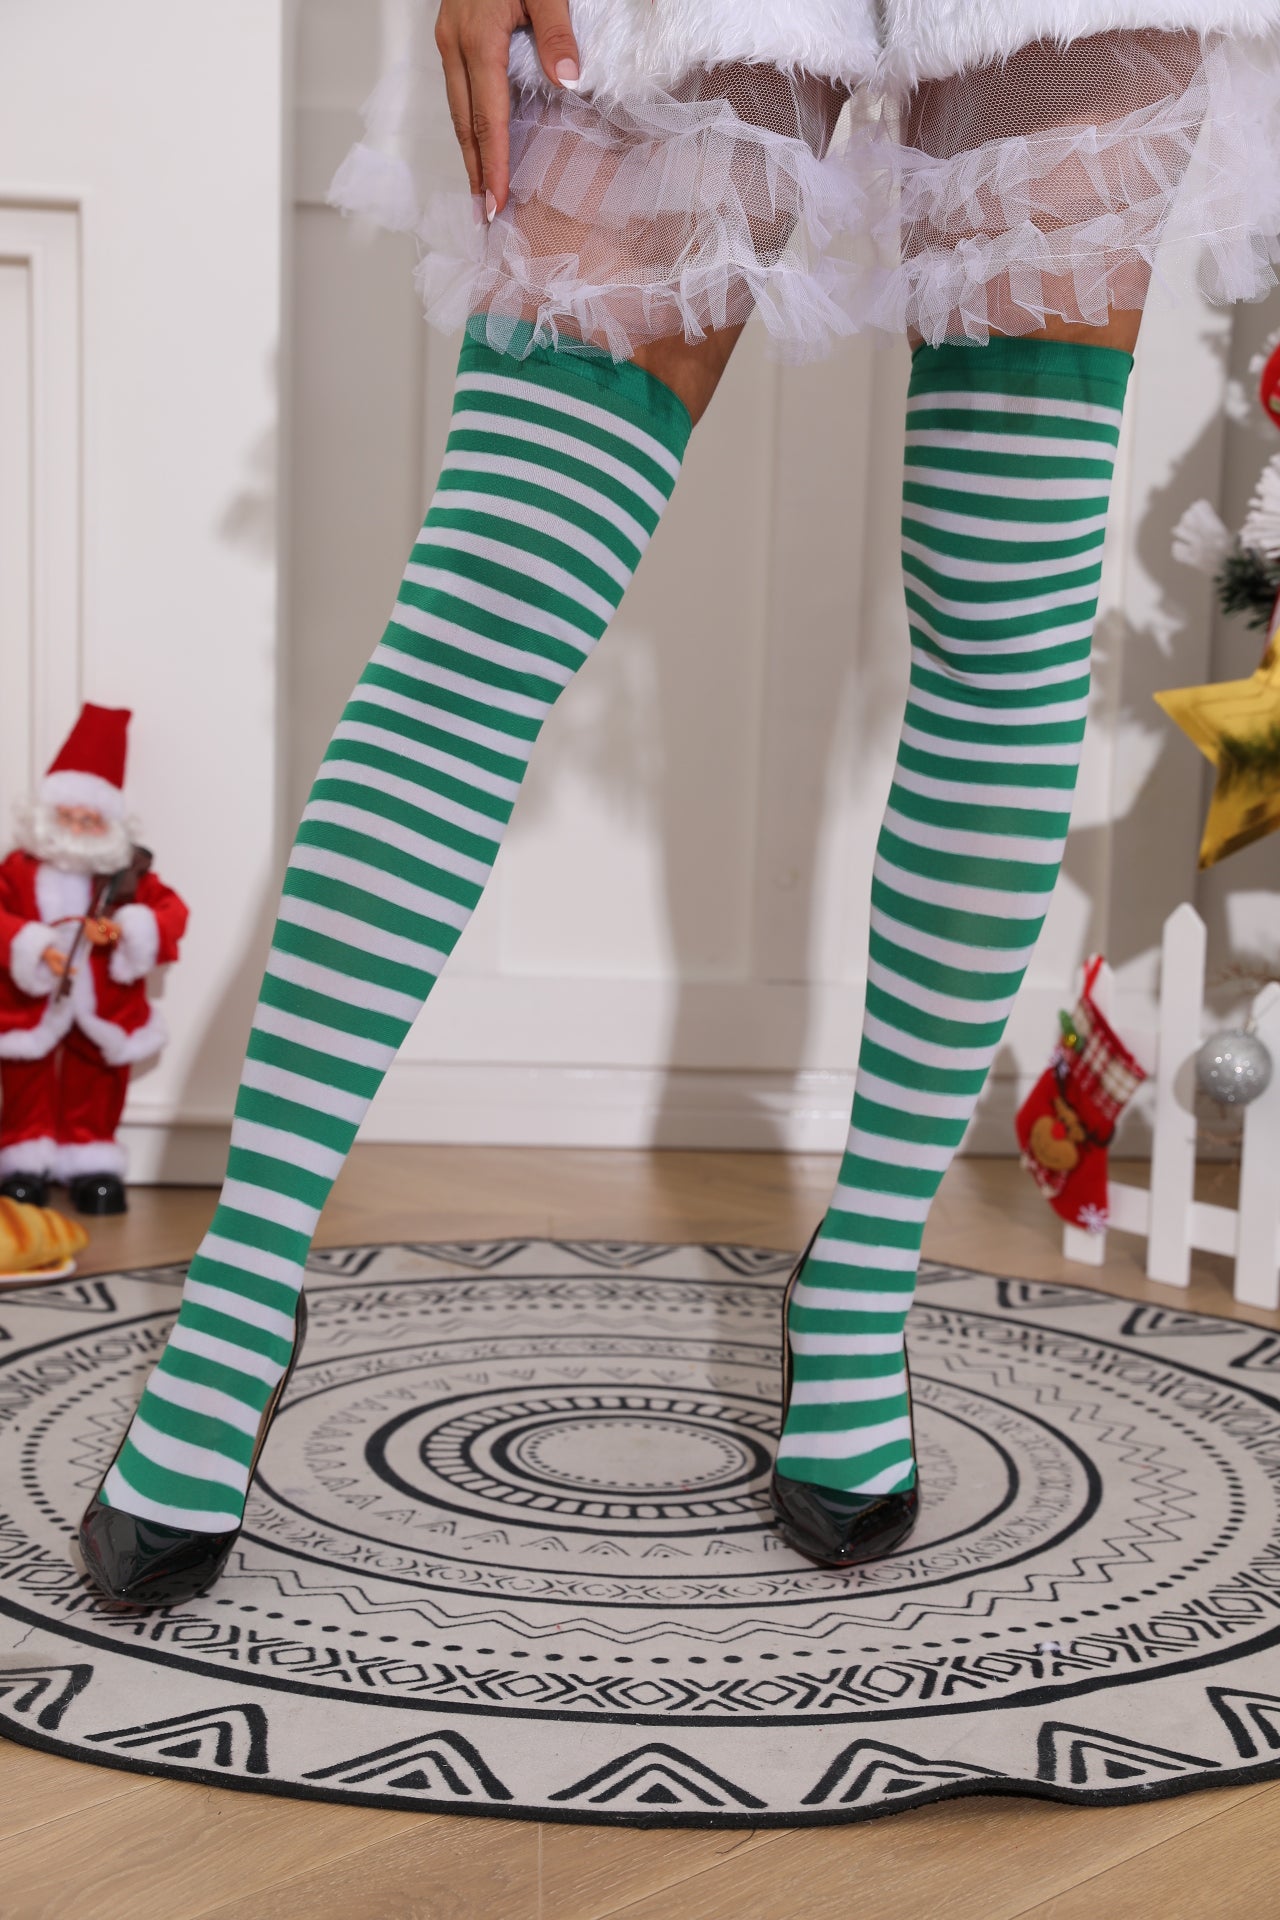 Penkiiy Christmas Thigh High Stockings Women Girls Christmas